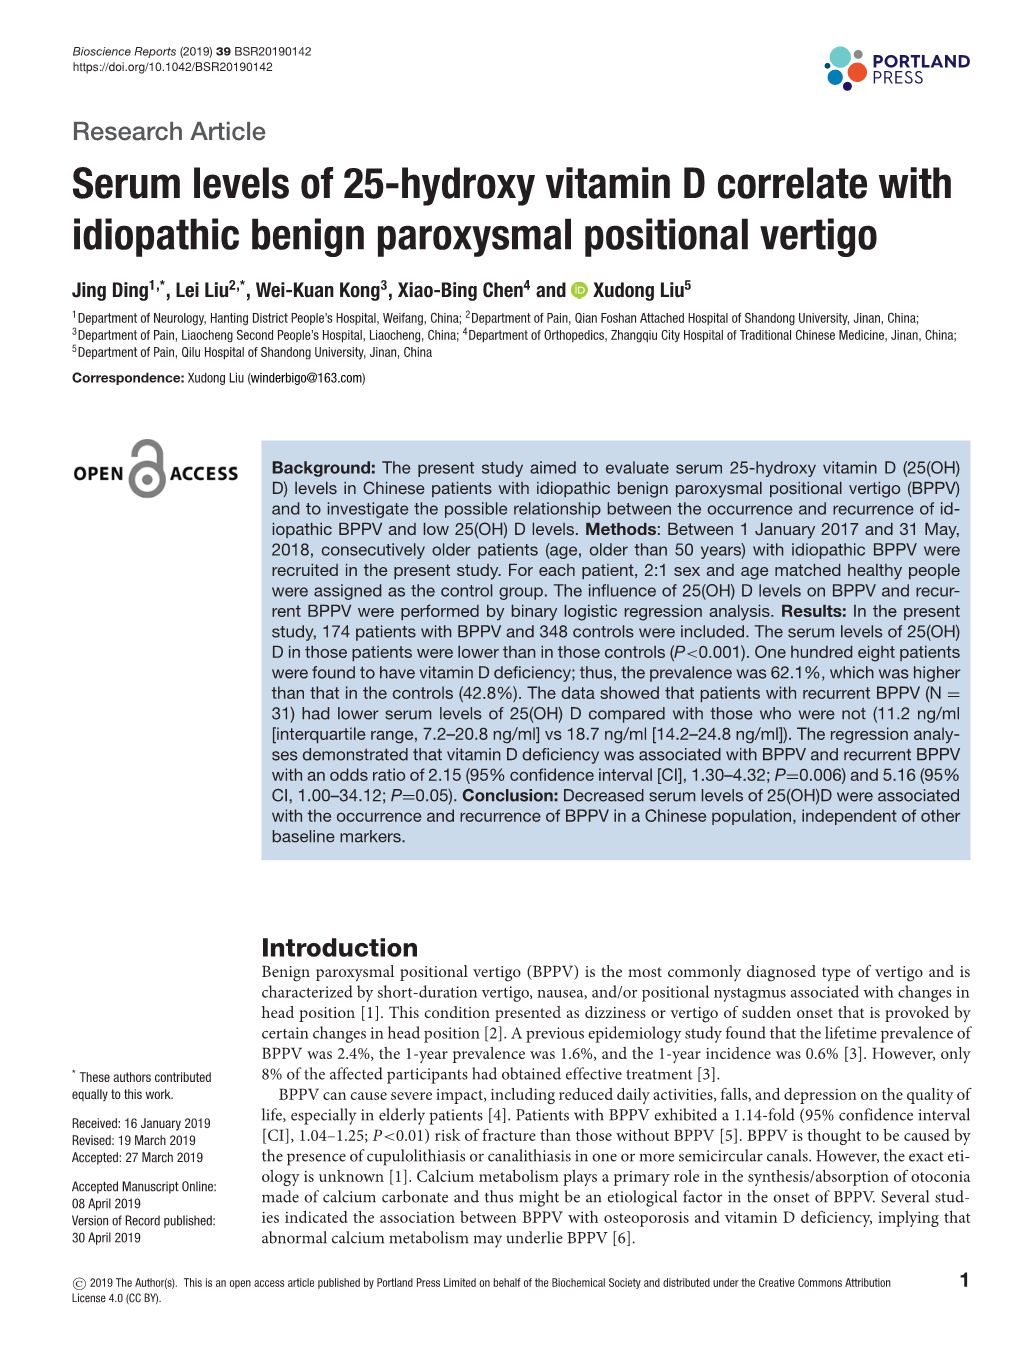 Serum Levels of 25-Hydroxy Vitamin D Correlate with Idiopathic Benign Paroxysmal Positional Vertigo